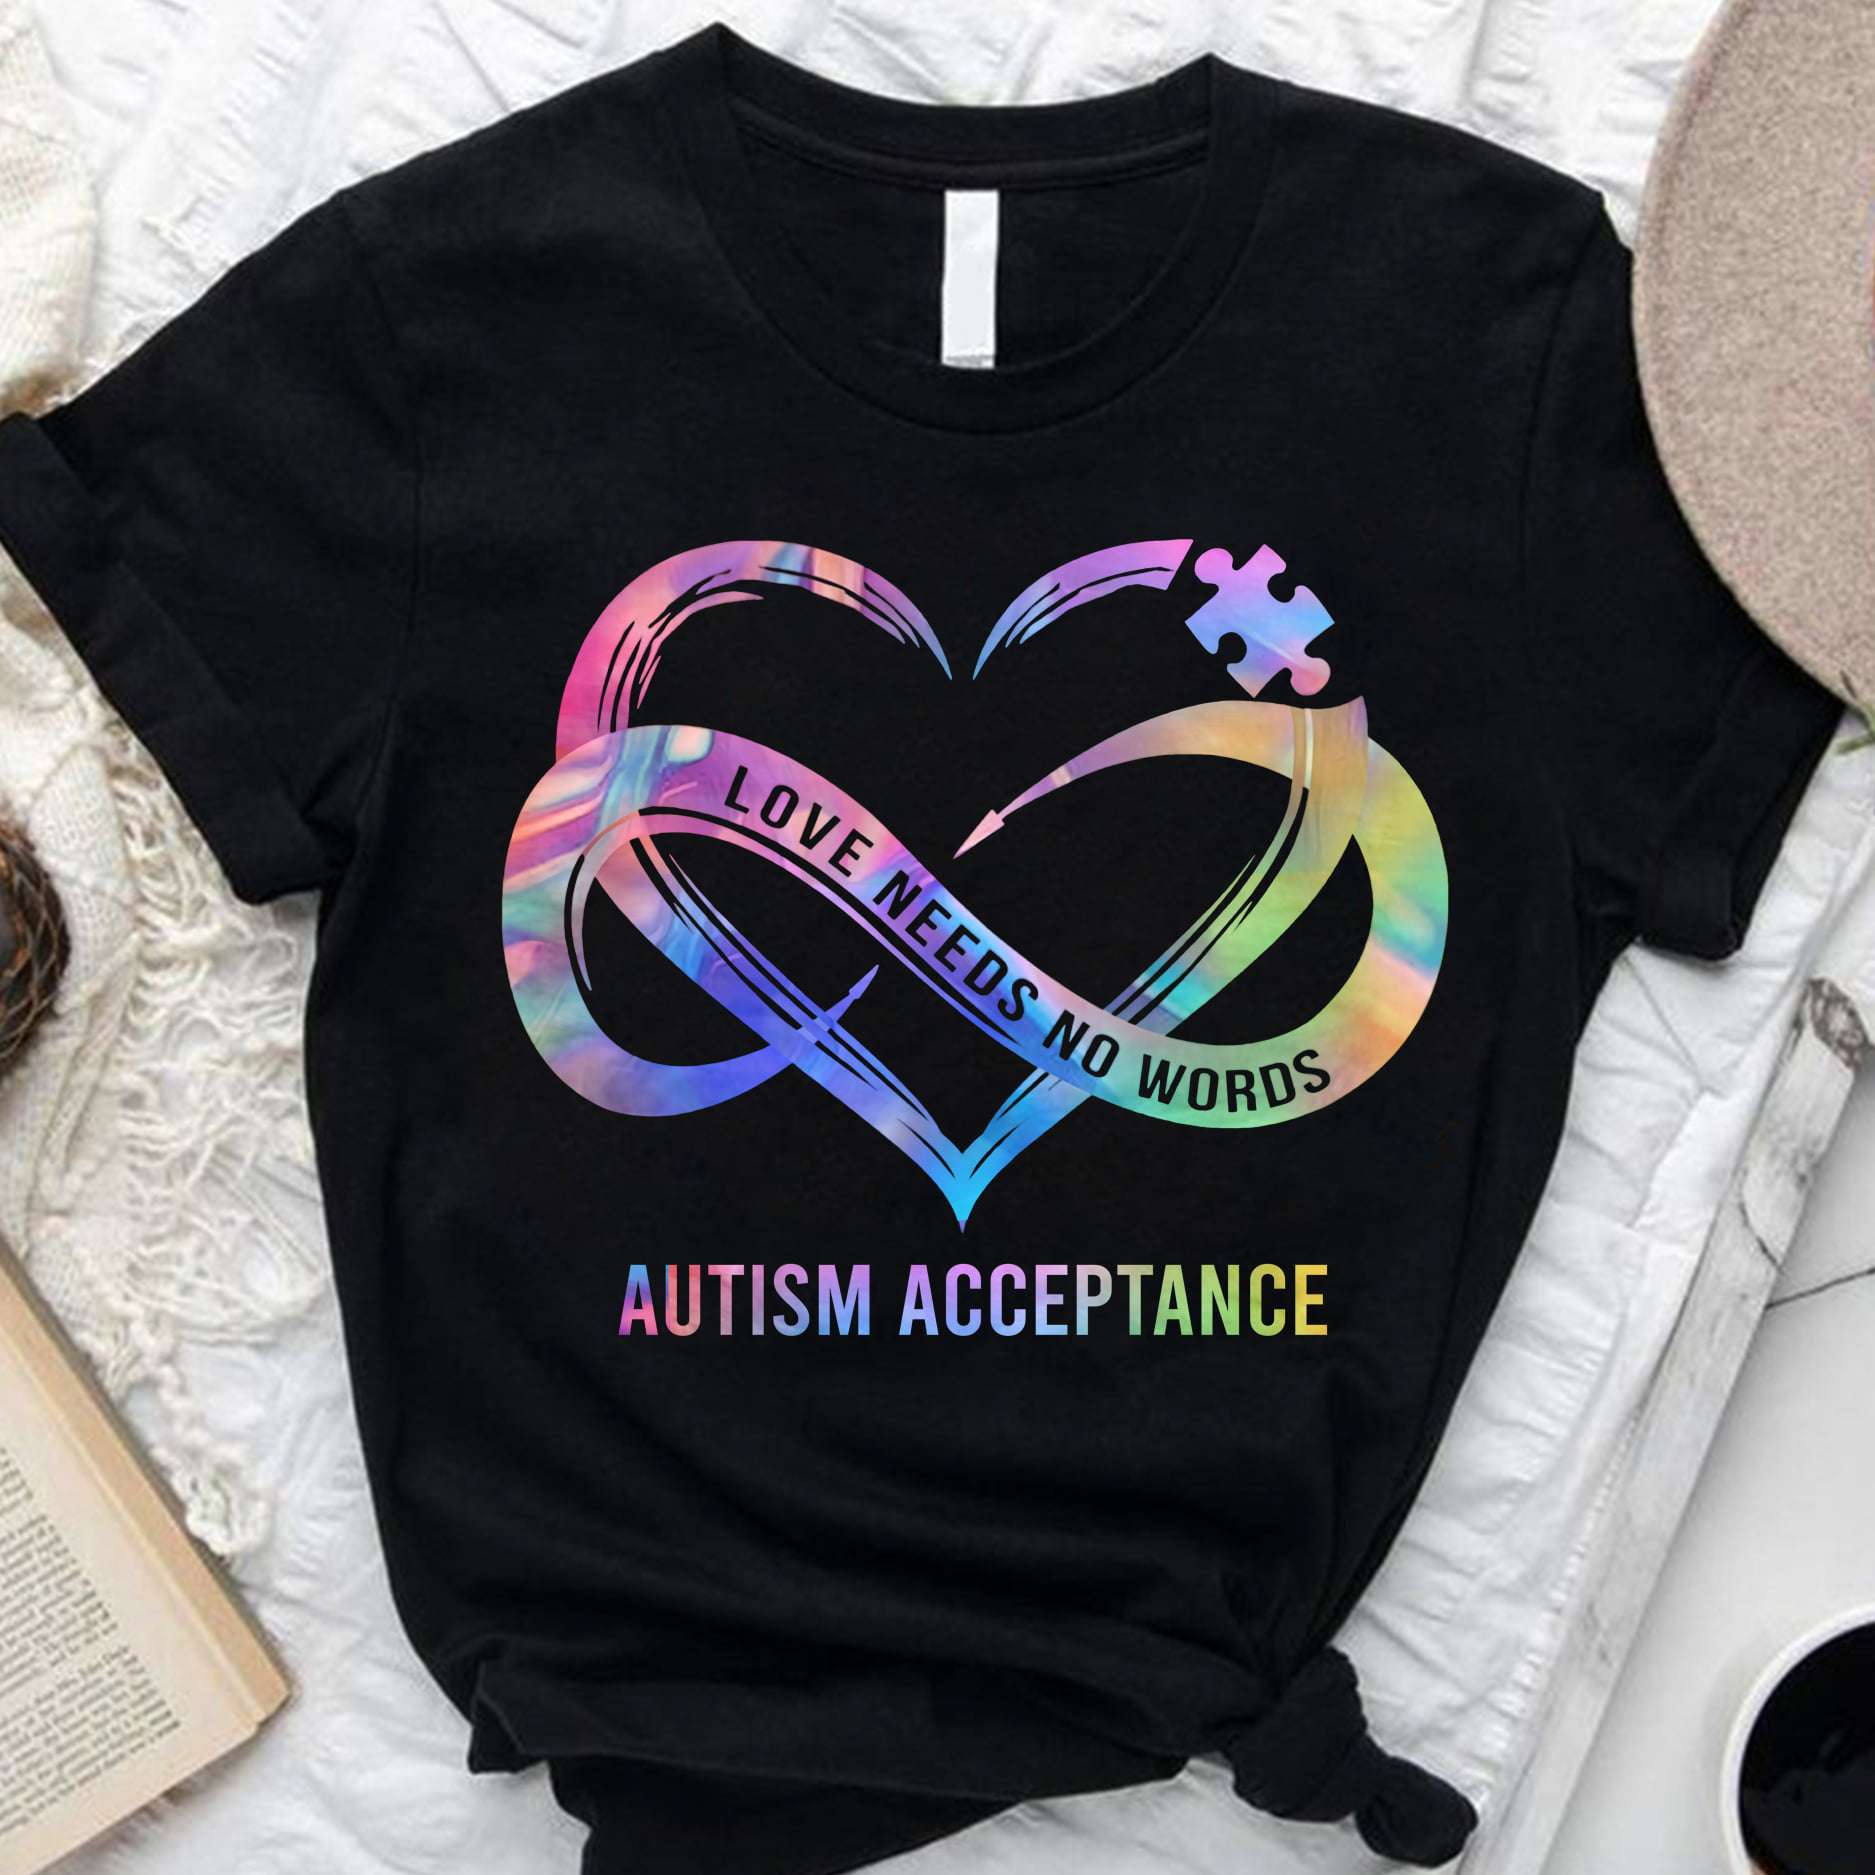 Love needs no words - Autism acceptance, autism awareness